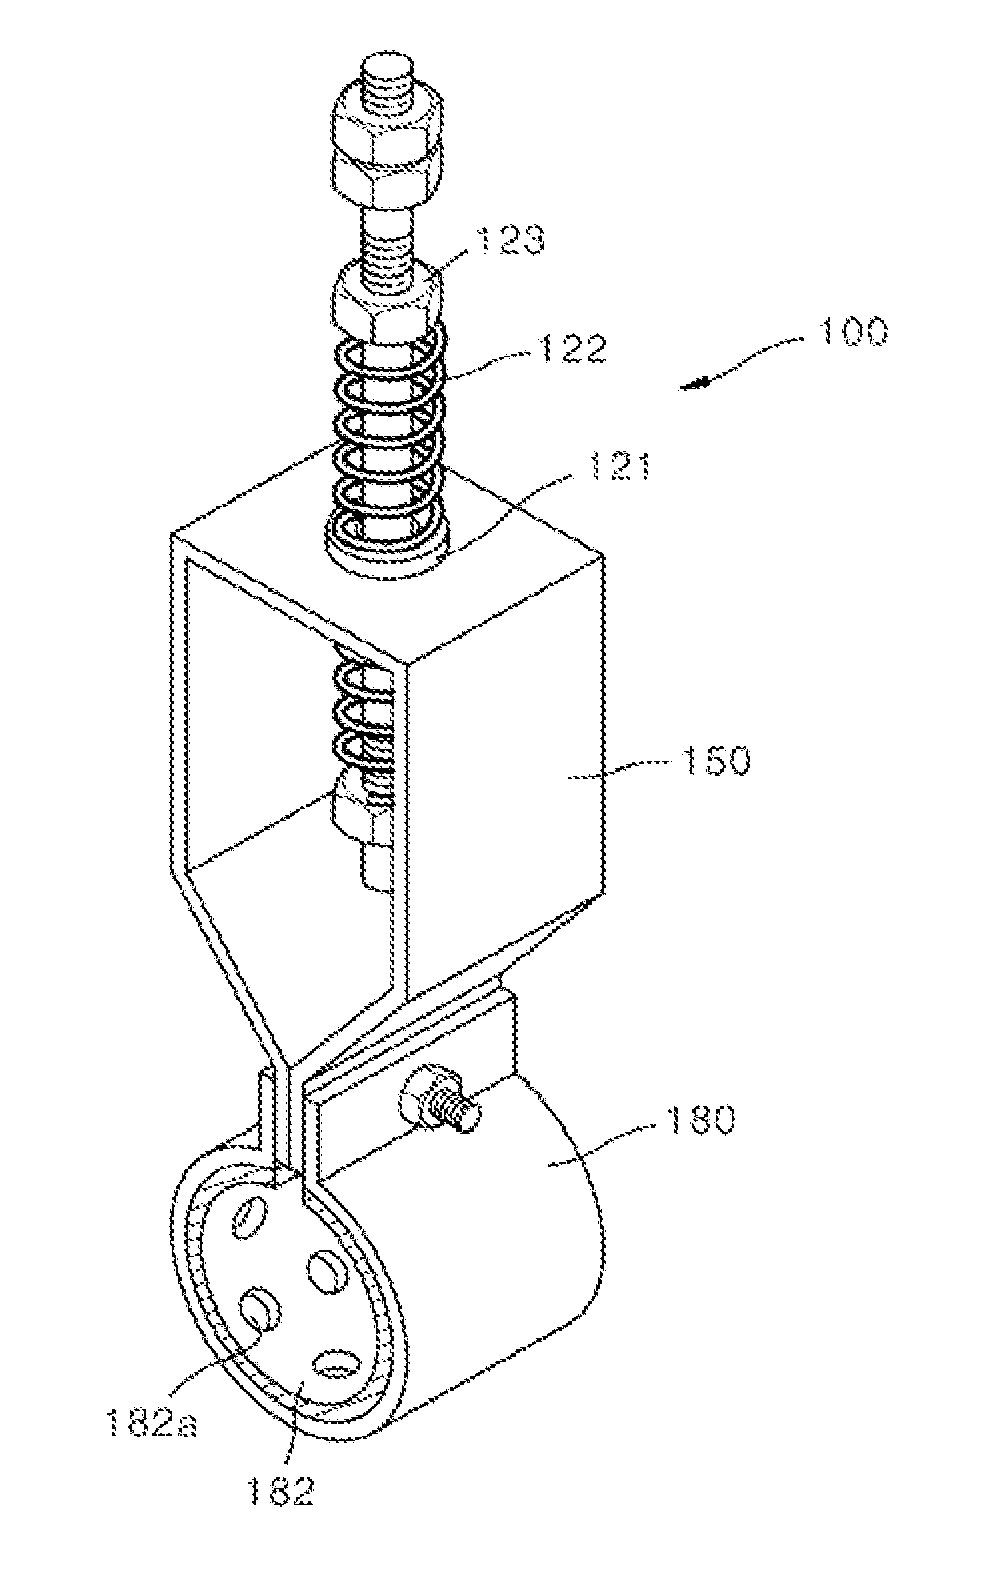 Hanger-type vibration isolating device